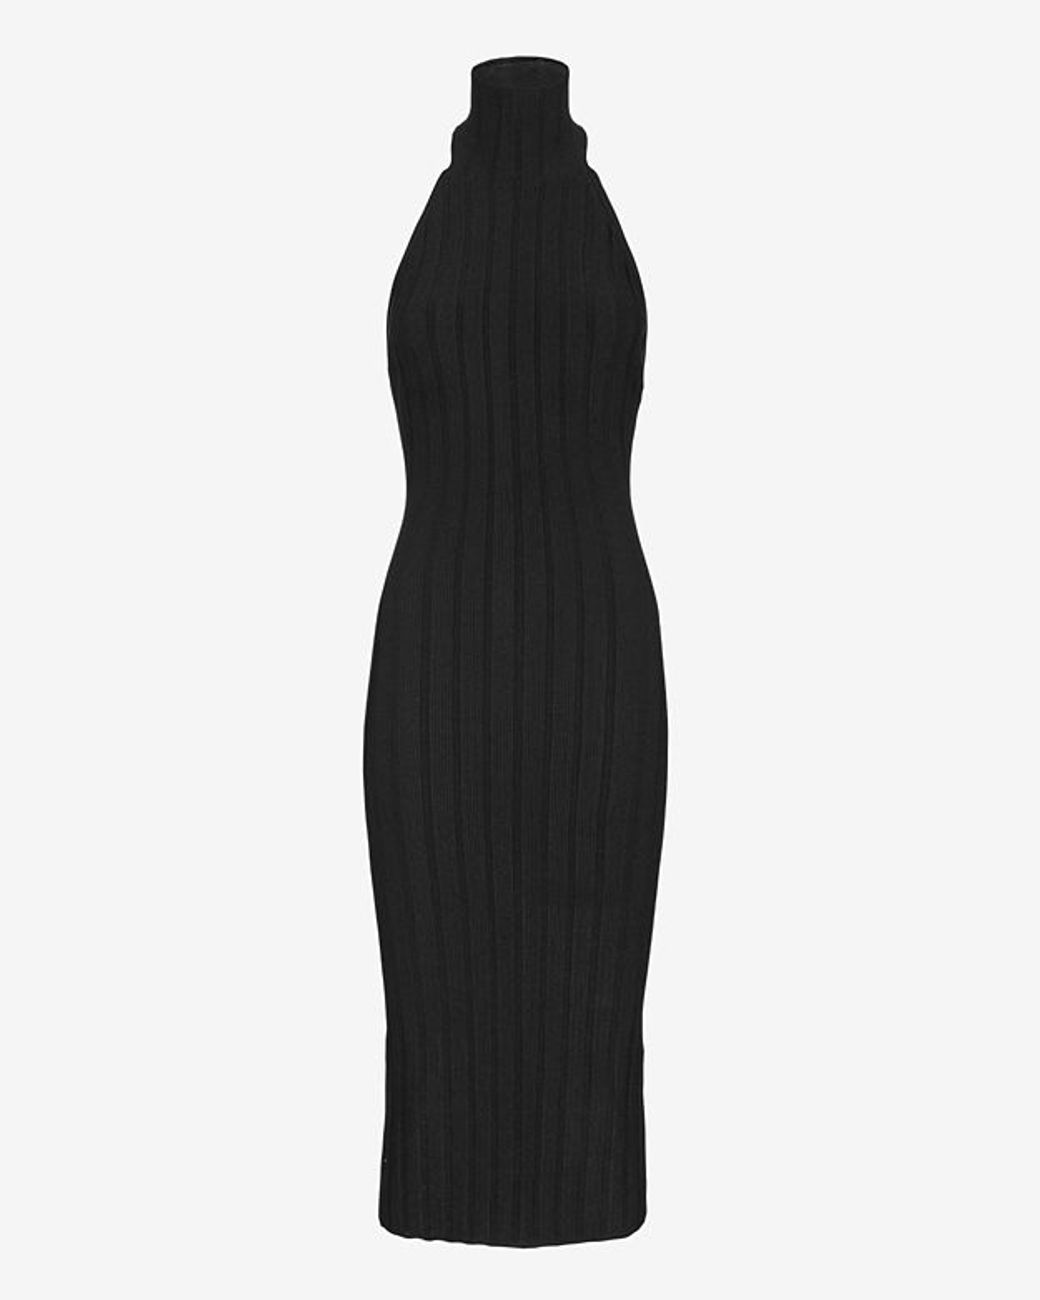 Cushnie et Ochs Open Back Halter Knit Dress in Black | Lyst Canada